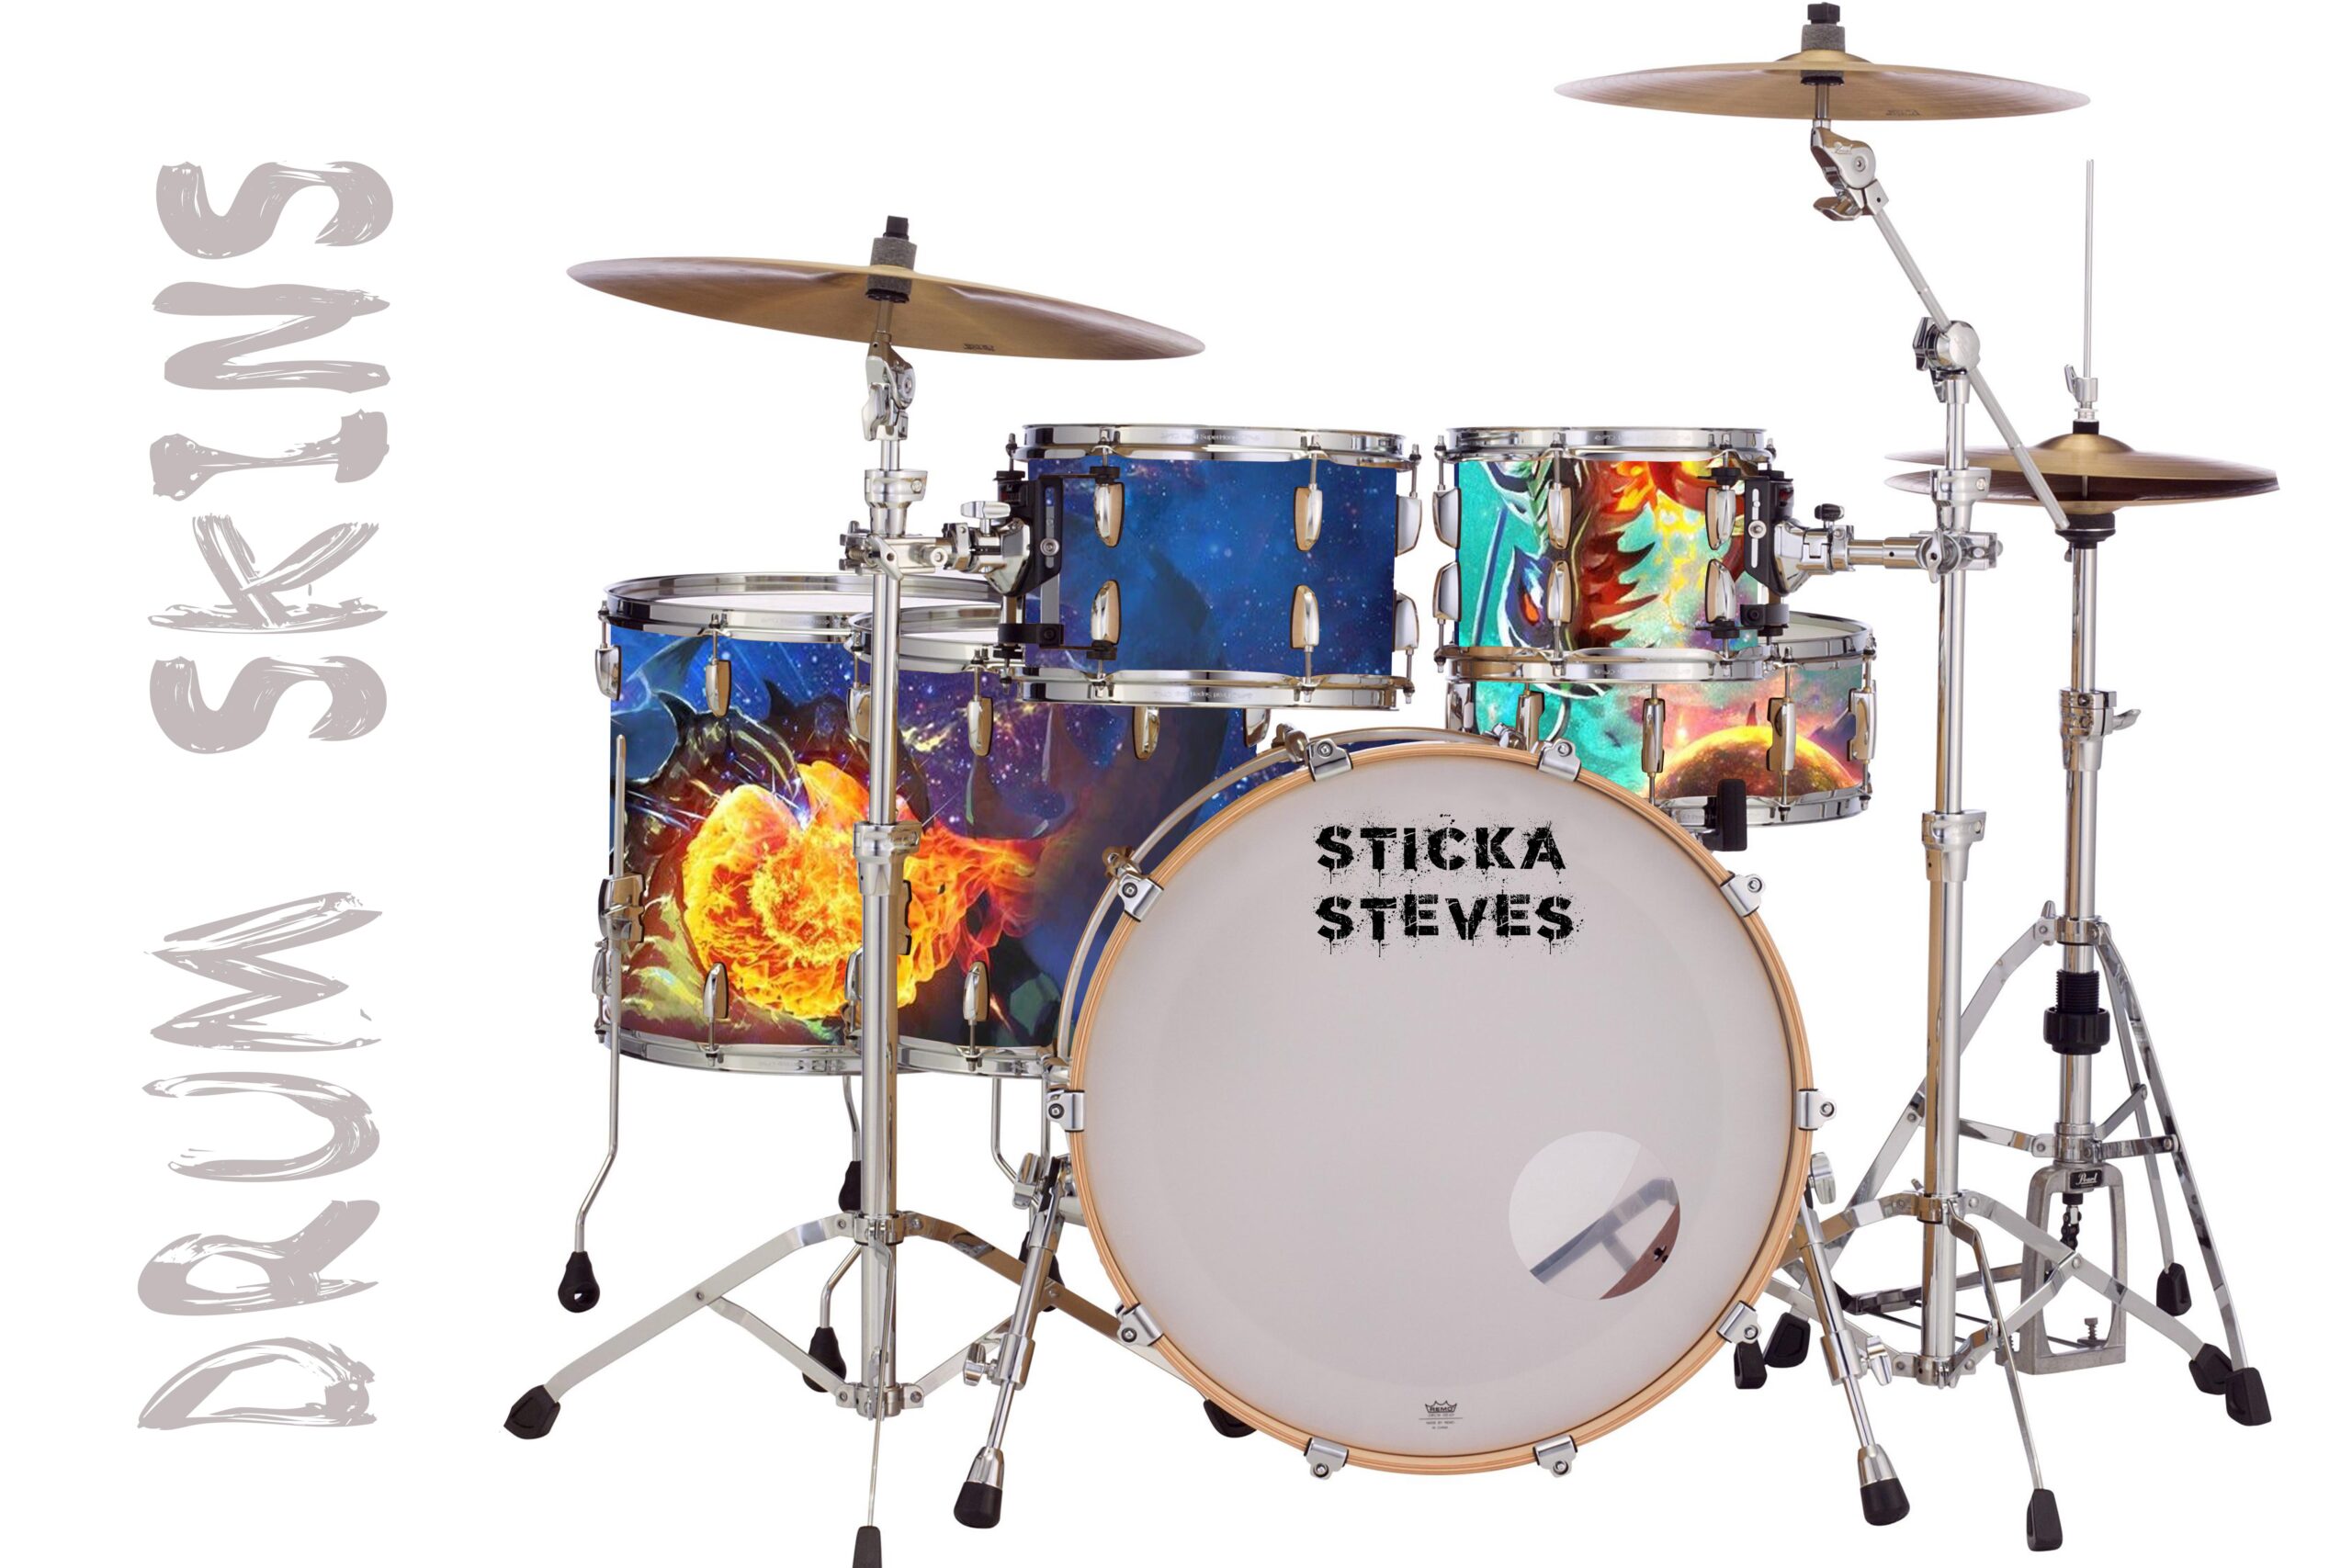 Sticka Steves Drum Wrap Galaxy Master 702 shown